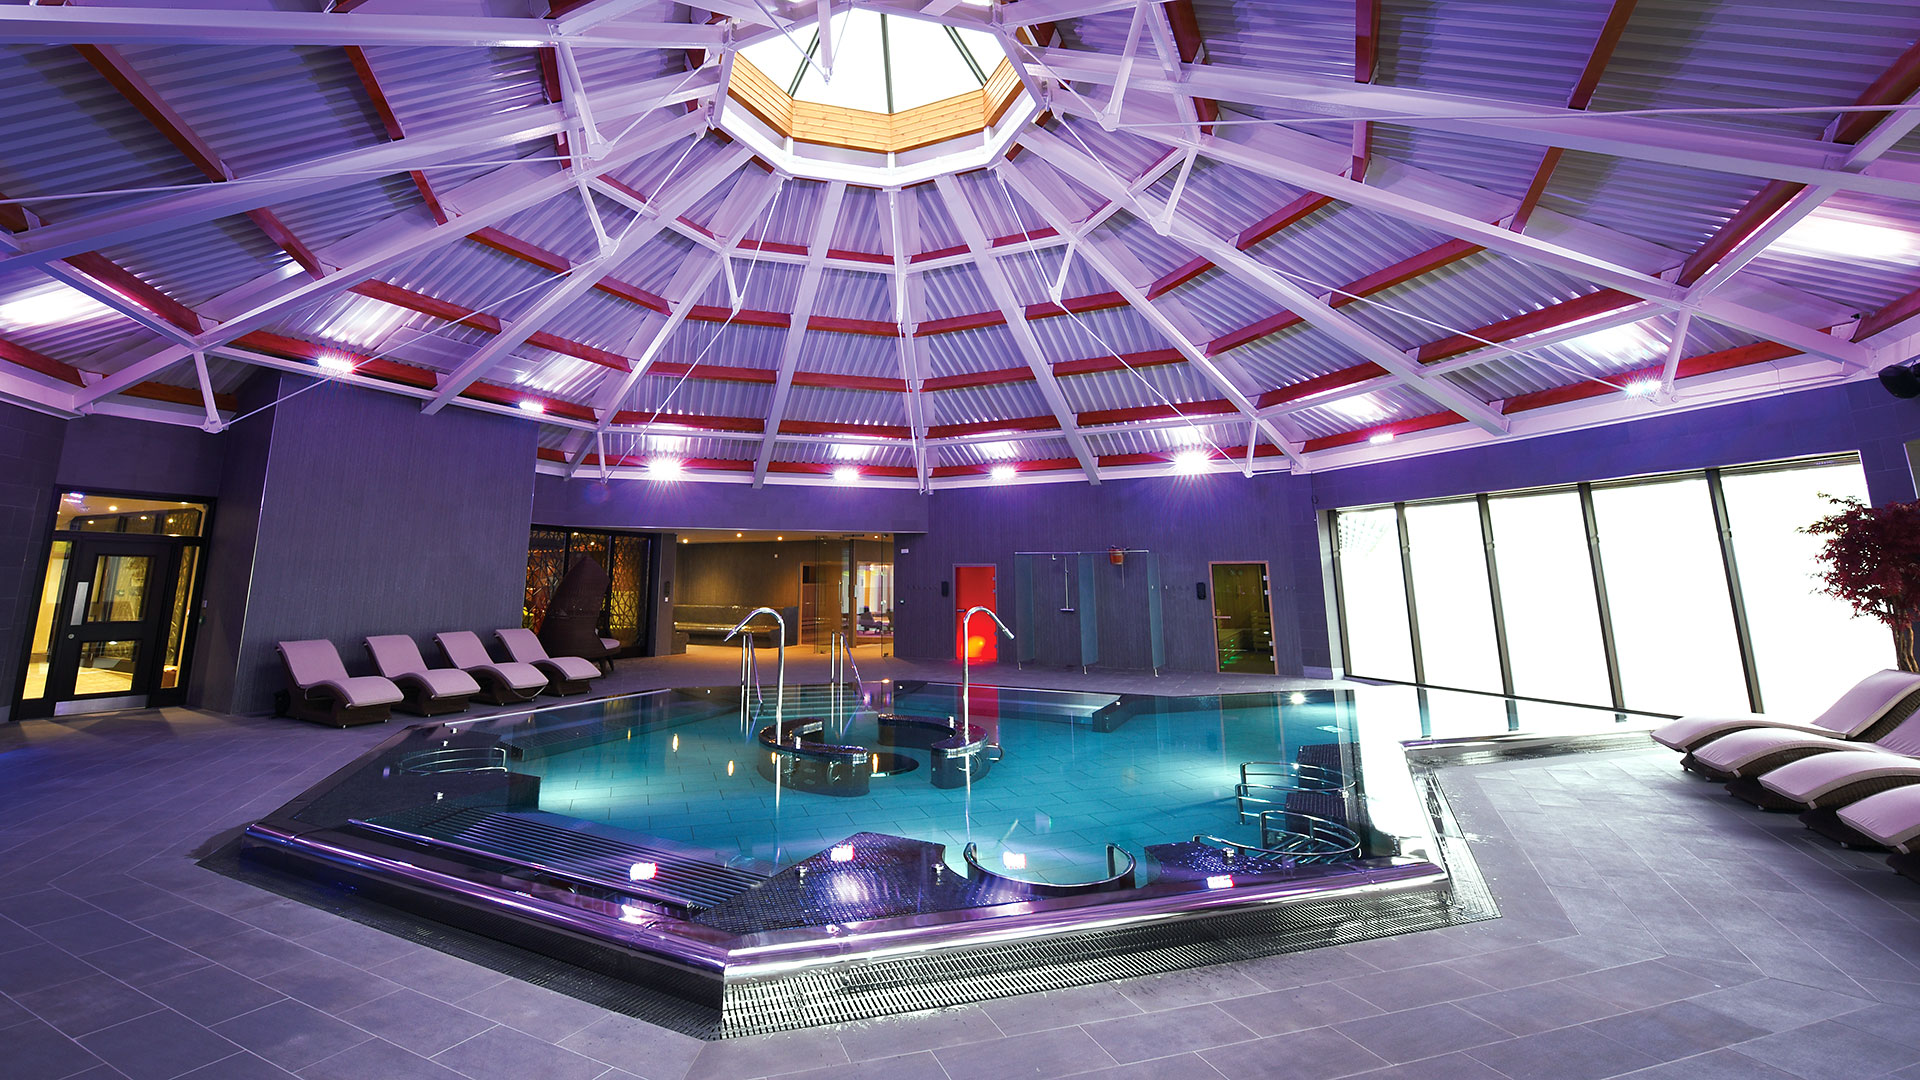 Indoor hydrotherapy spa pool - Ramside Hall Hotel, Durham